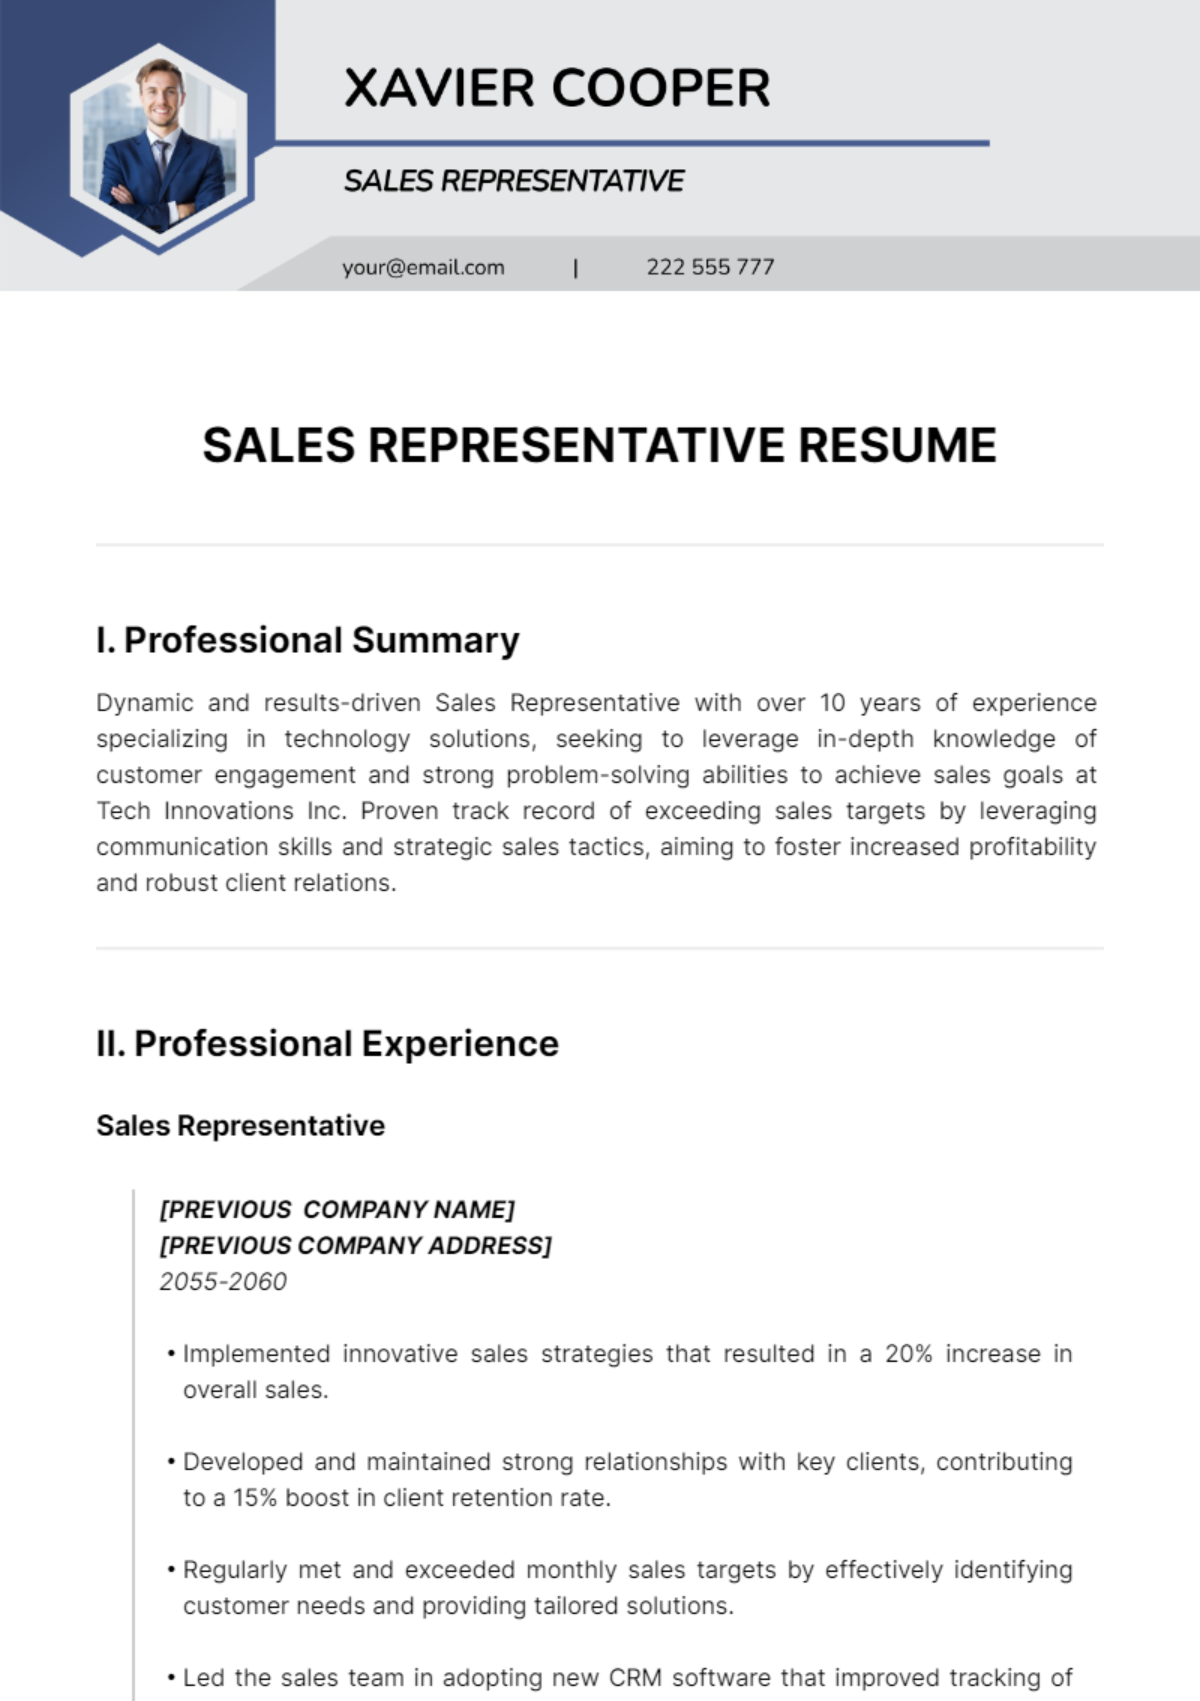 Sales Representative Resume Template